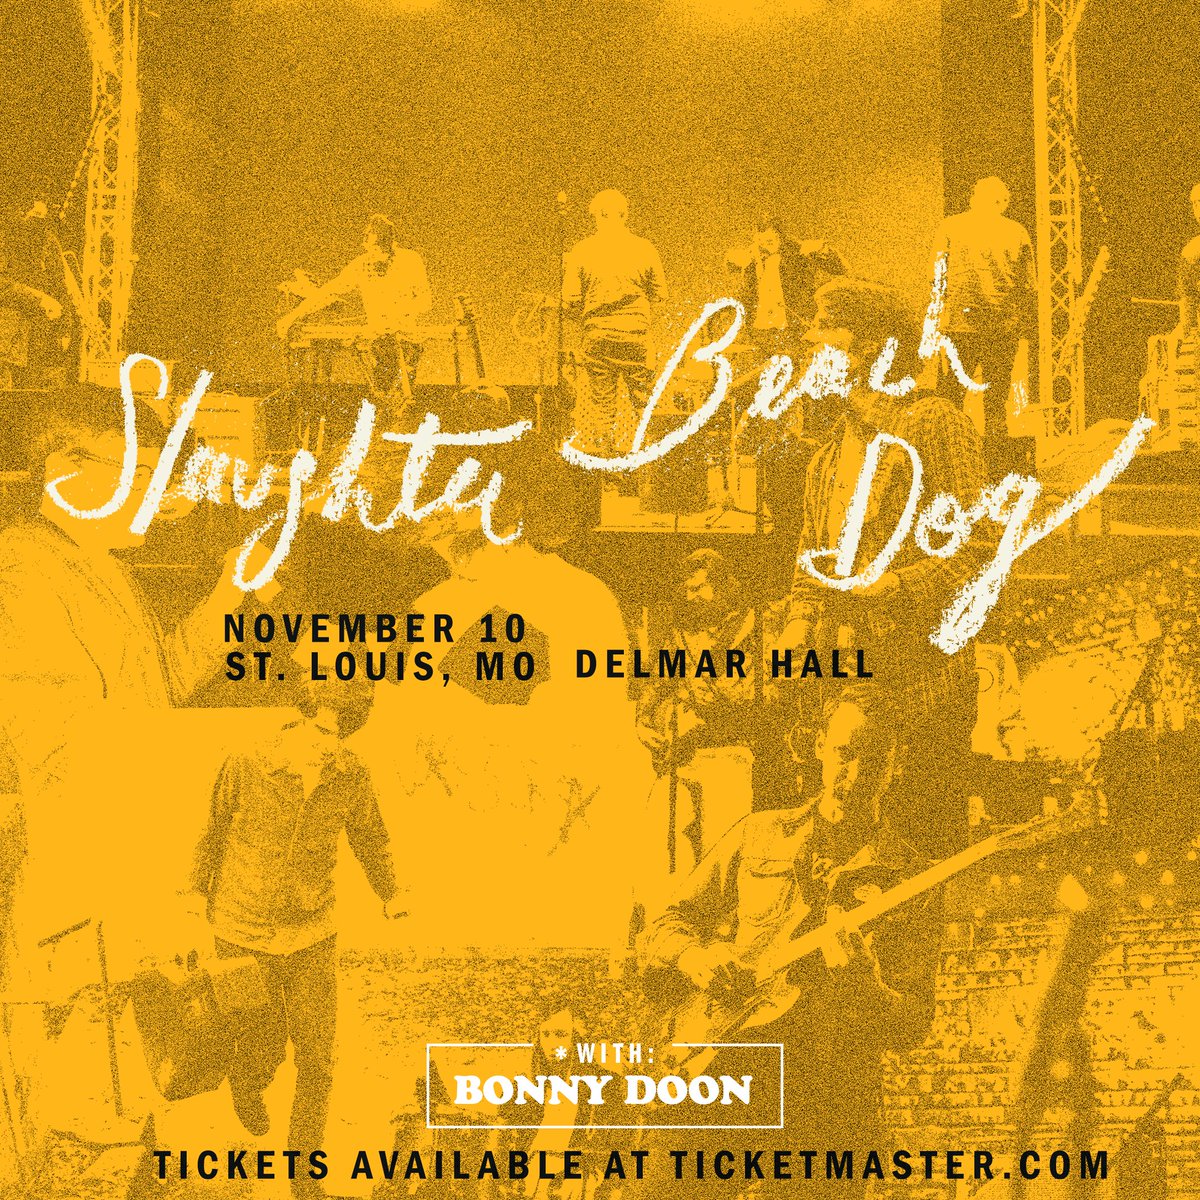 ON SALE NOW! @beatsbydog at Delmar Hall |11.10| with special guest @bonnydoonband! More info + RSVP: tinyurl.com/b8w7whrx Get 🎟‘s: tinyurl.com/4vcj83kkv